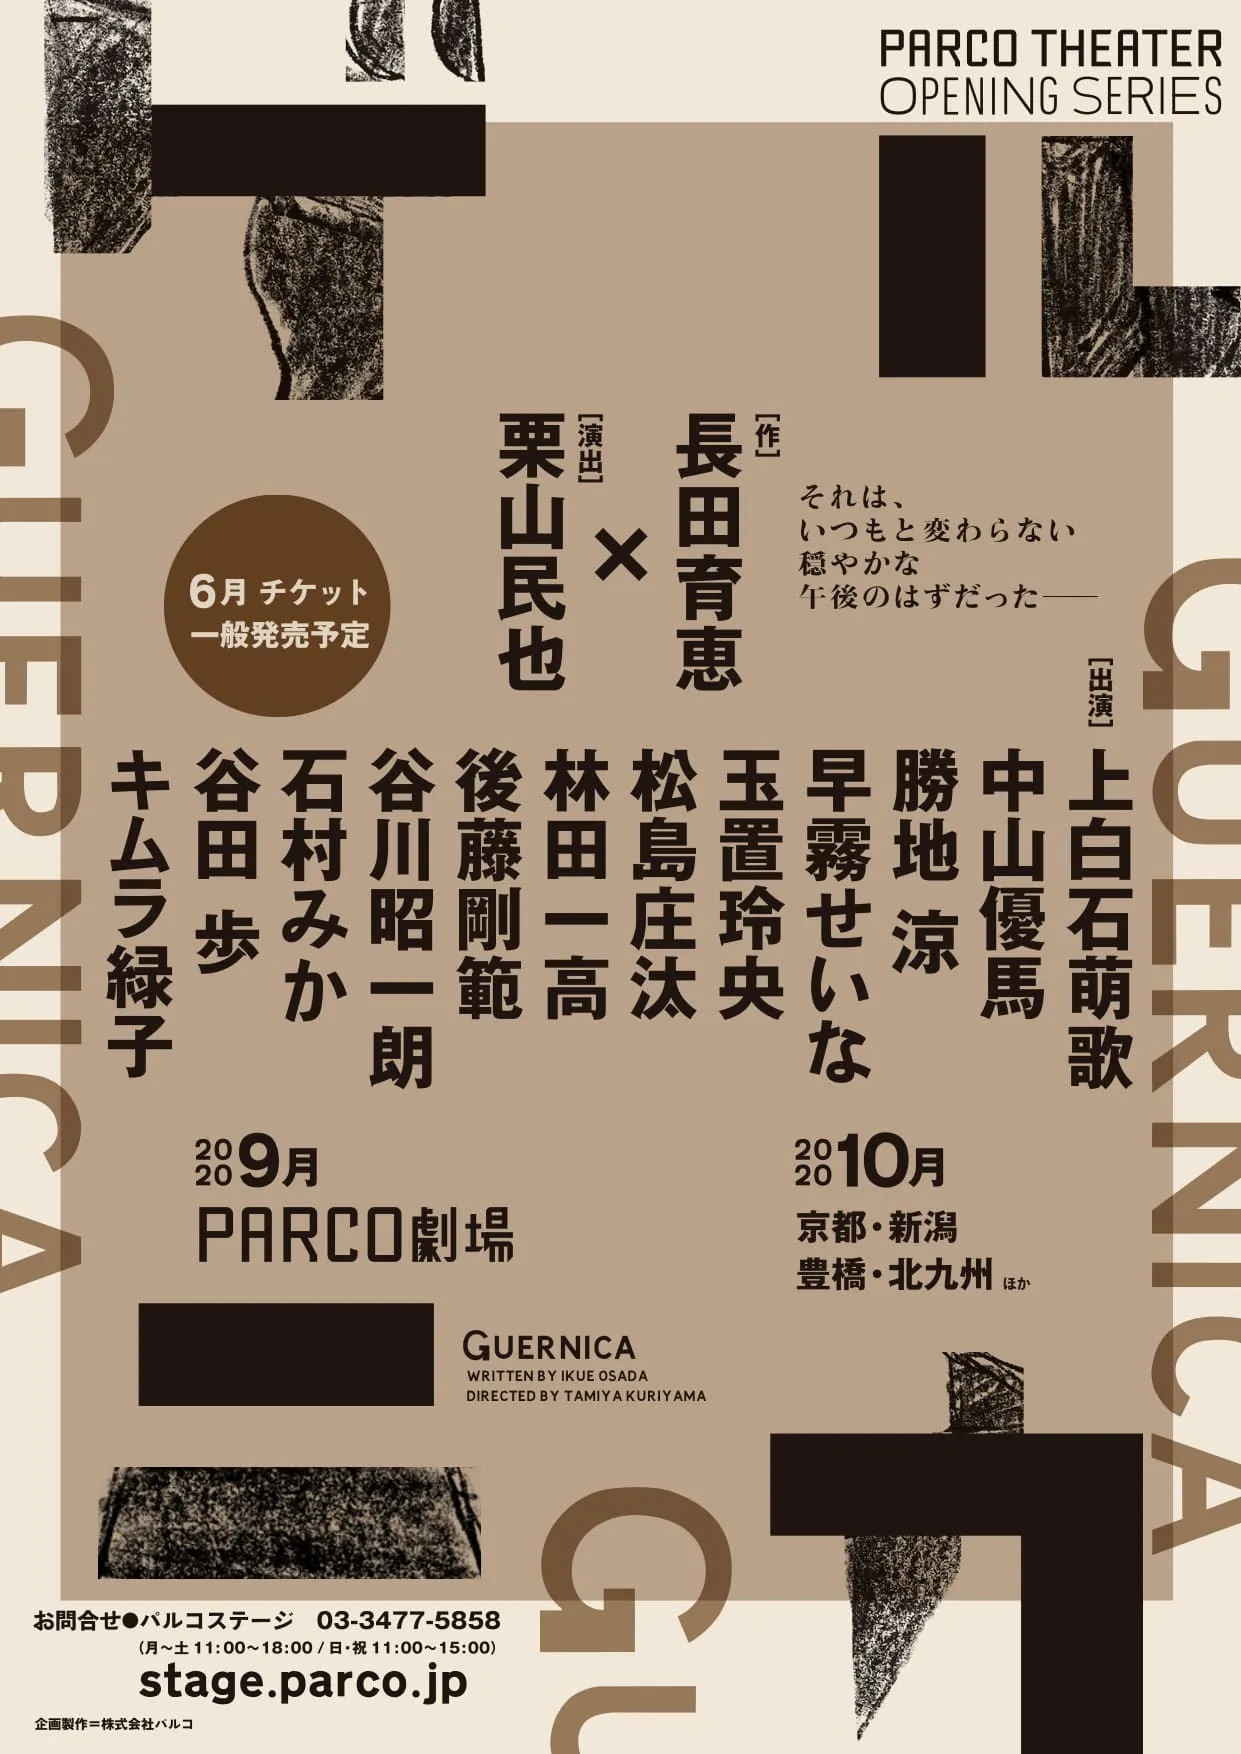 PARCO劇場オープニング・シリーズ　パルコ・プロデュース2020「ゲルニカ」は9月より上演